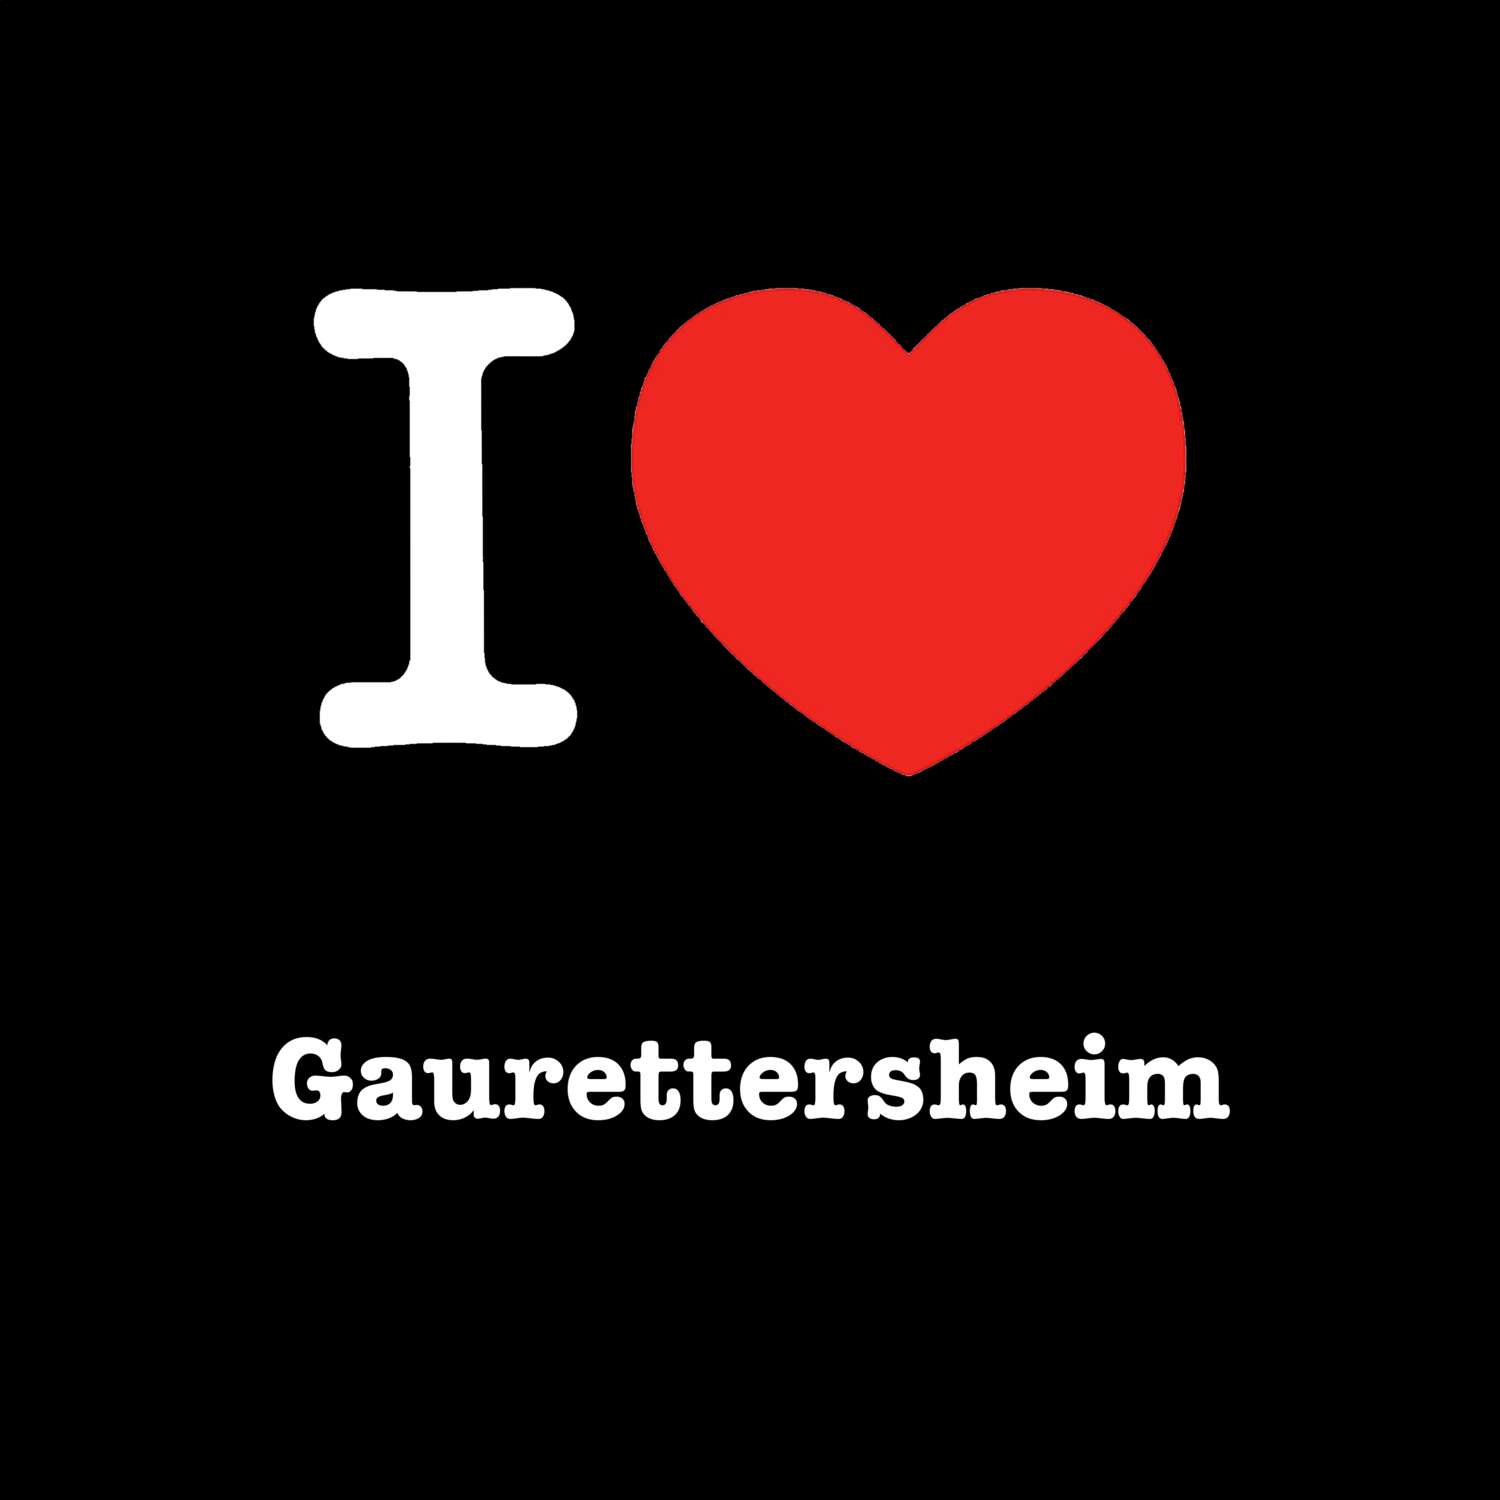 Gaurettersheim T-Shirt »I love«